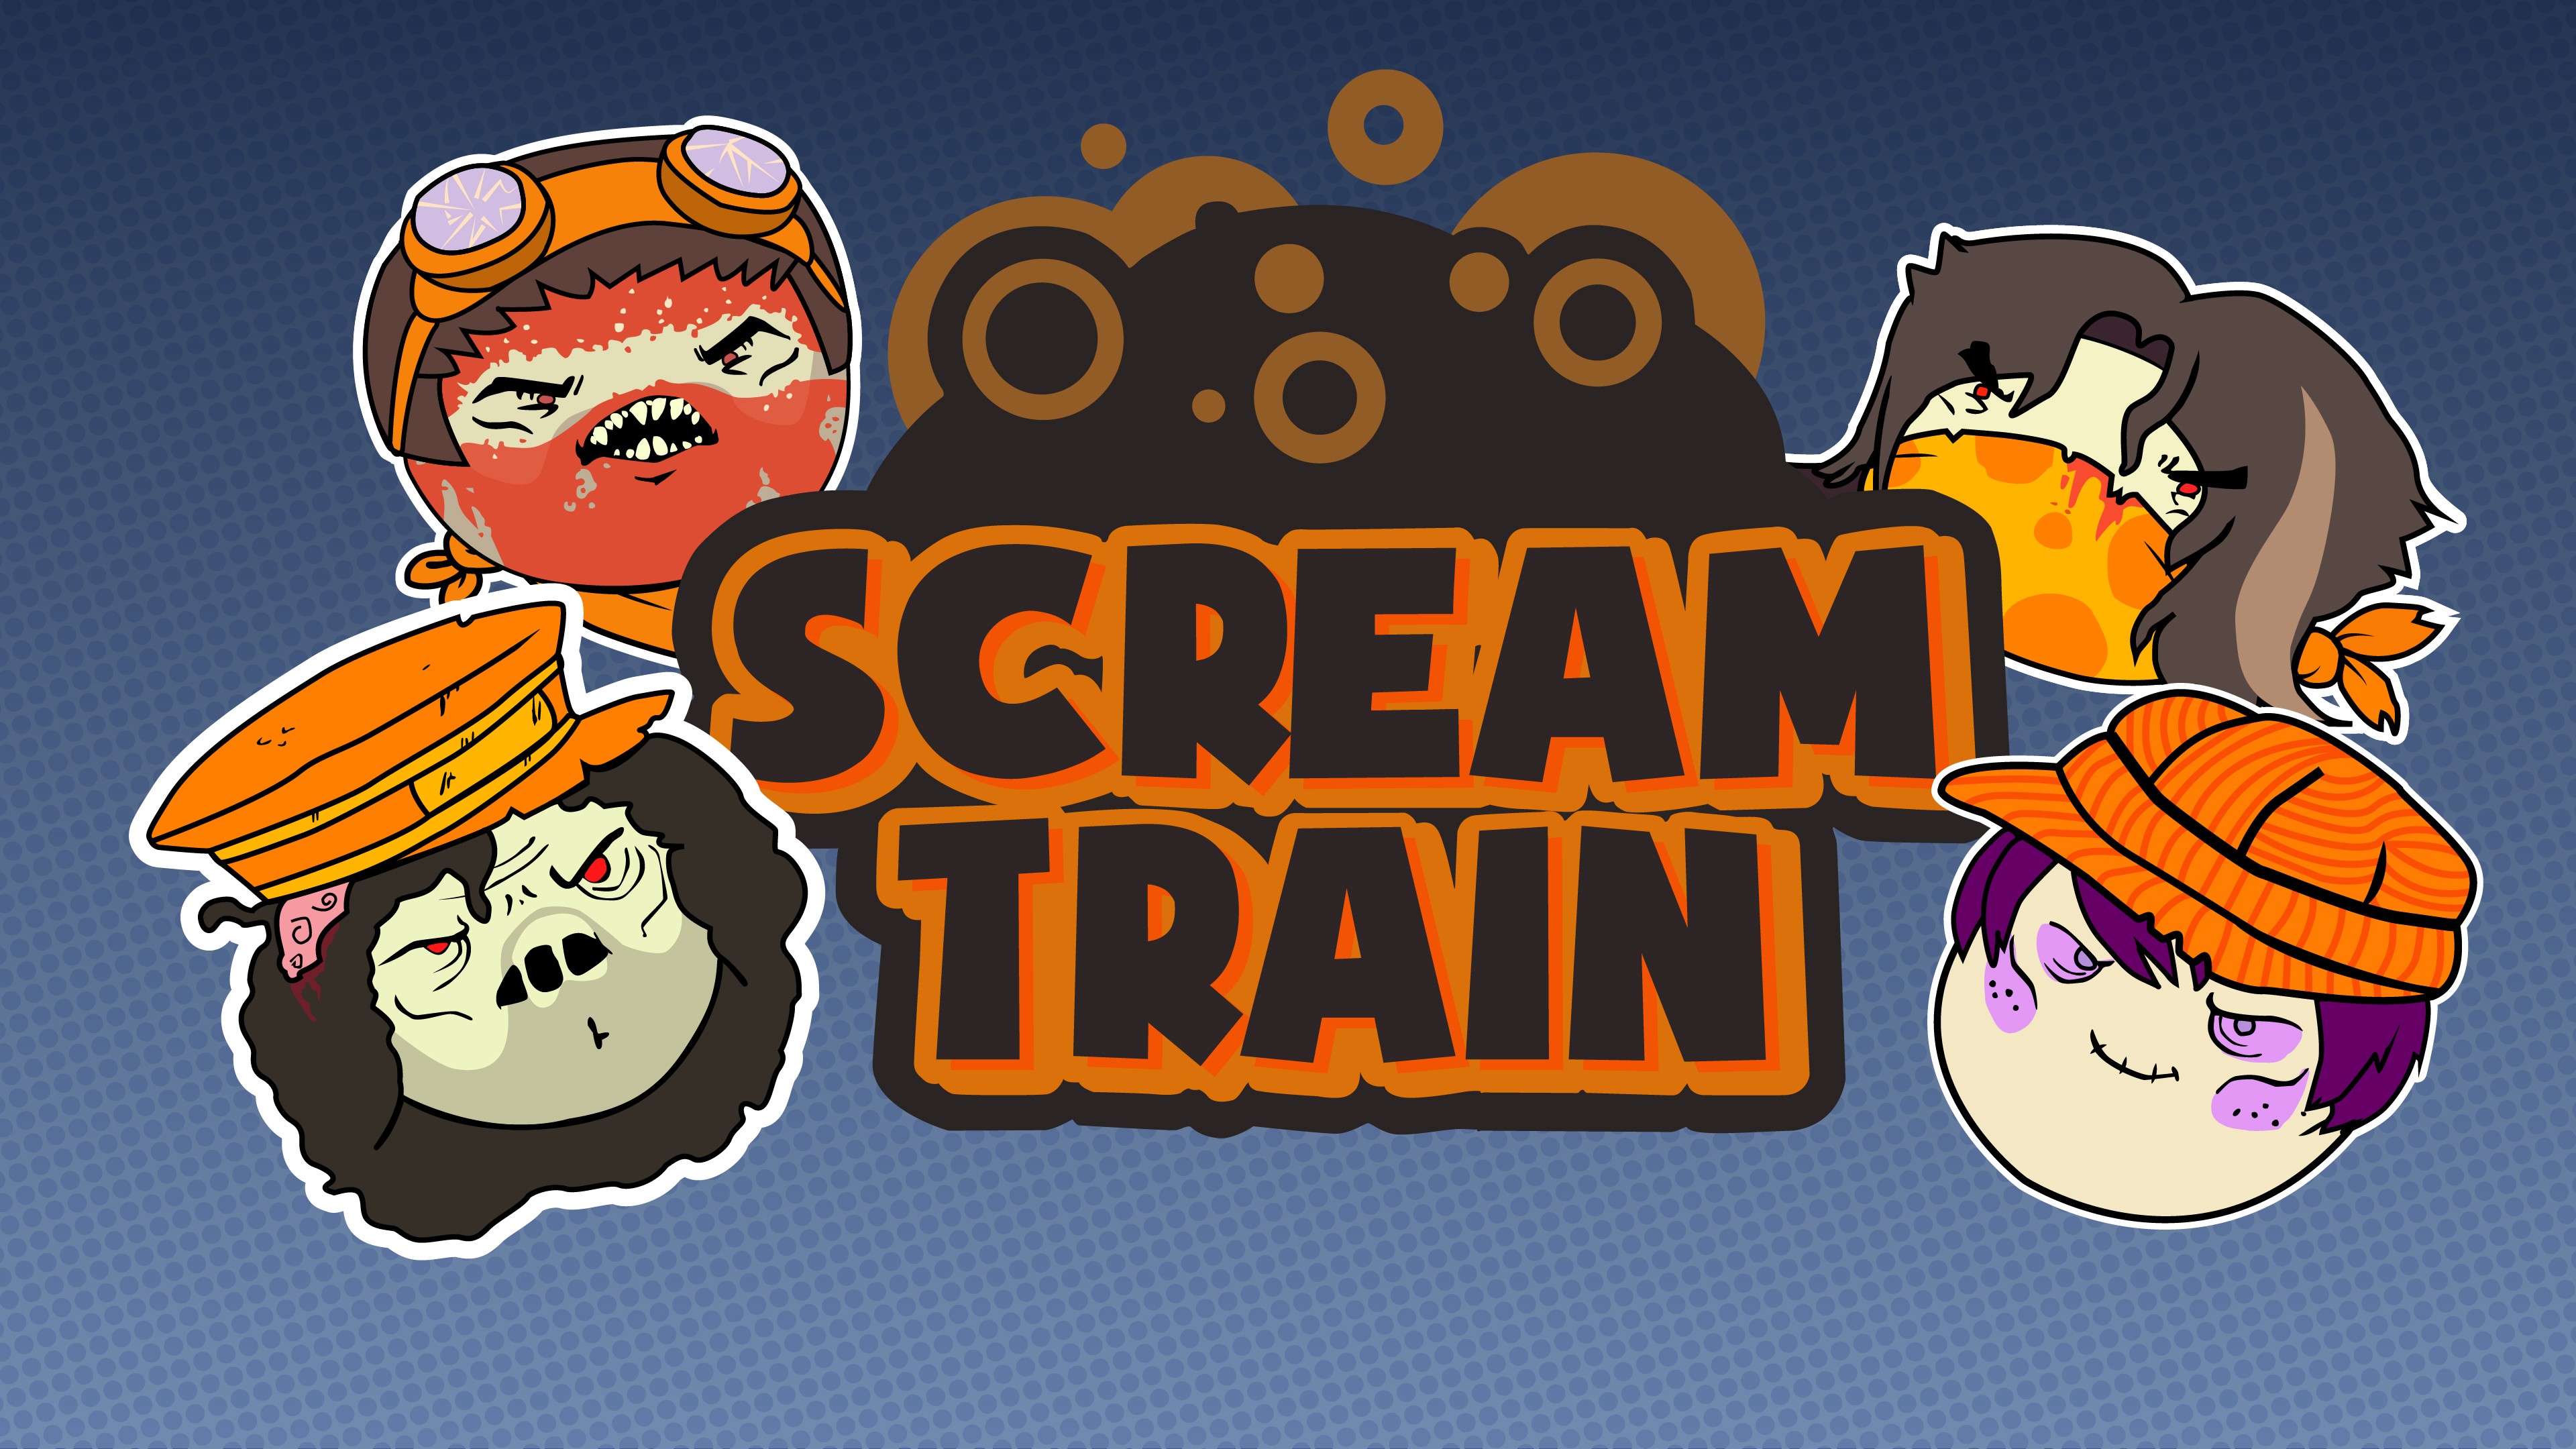 Game Grumps Steam Train Video Games YouTube Halloween 3840x2160